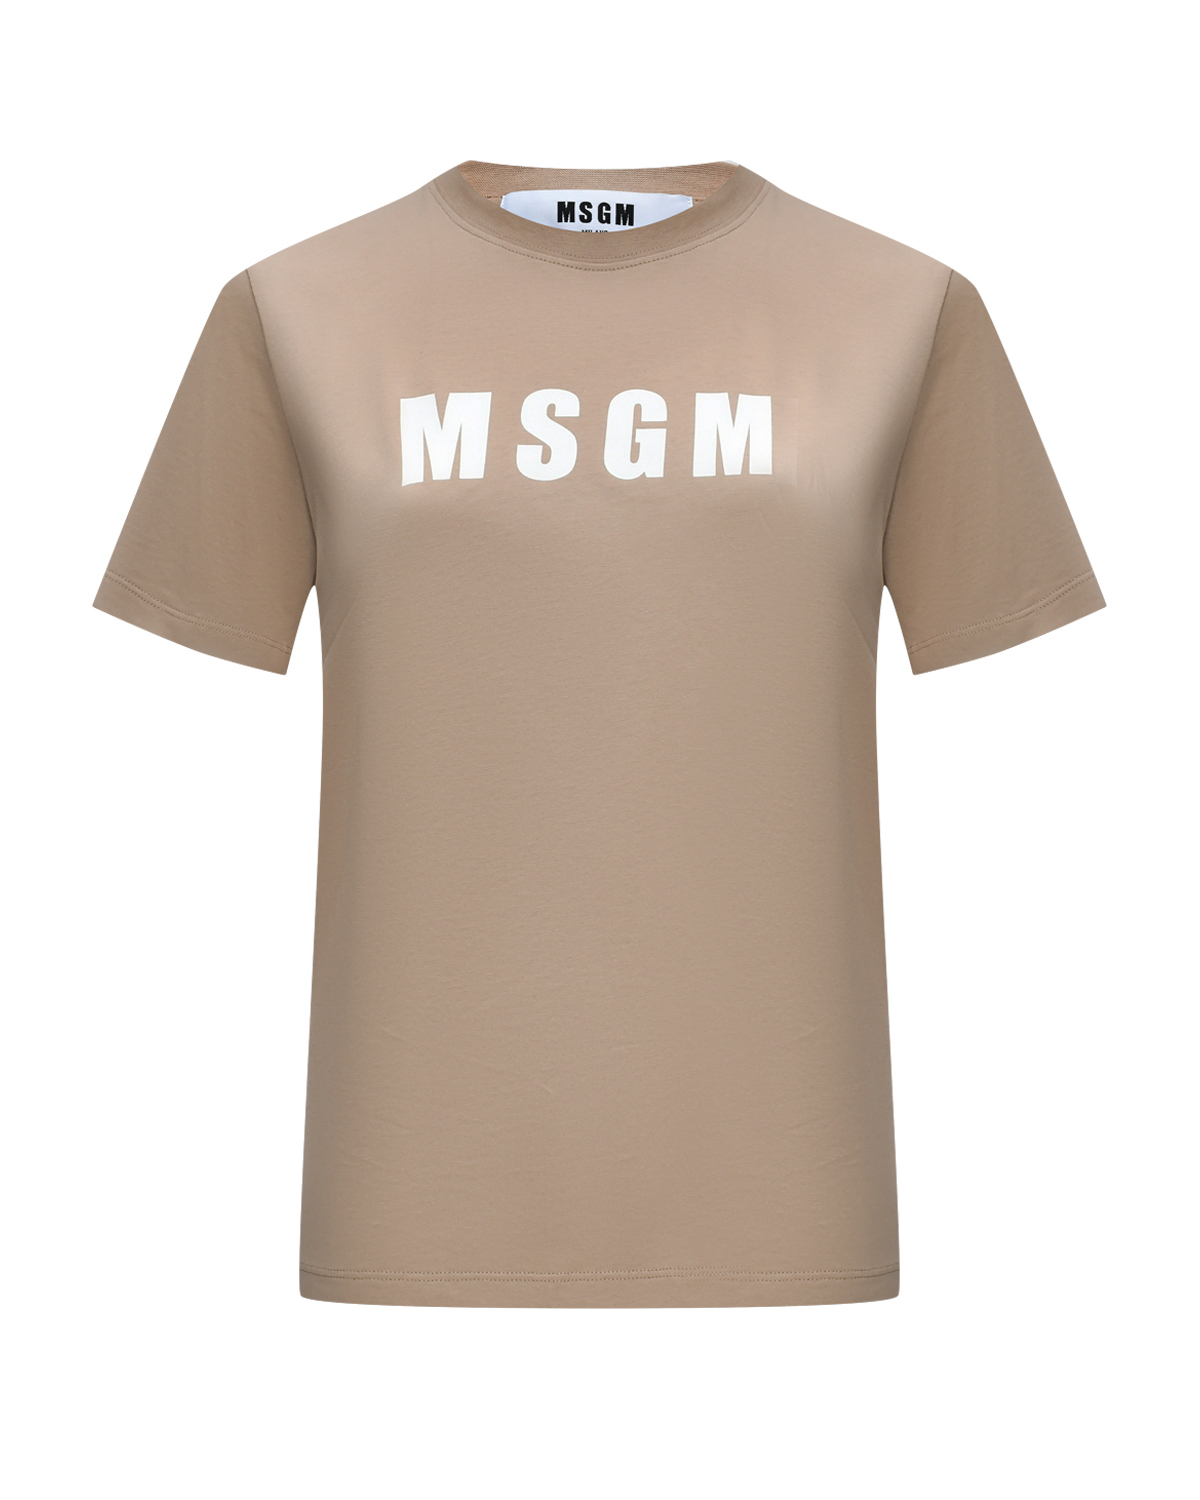 Базовая футболка с лого MSGM футболка с крупным лого голубая msgm